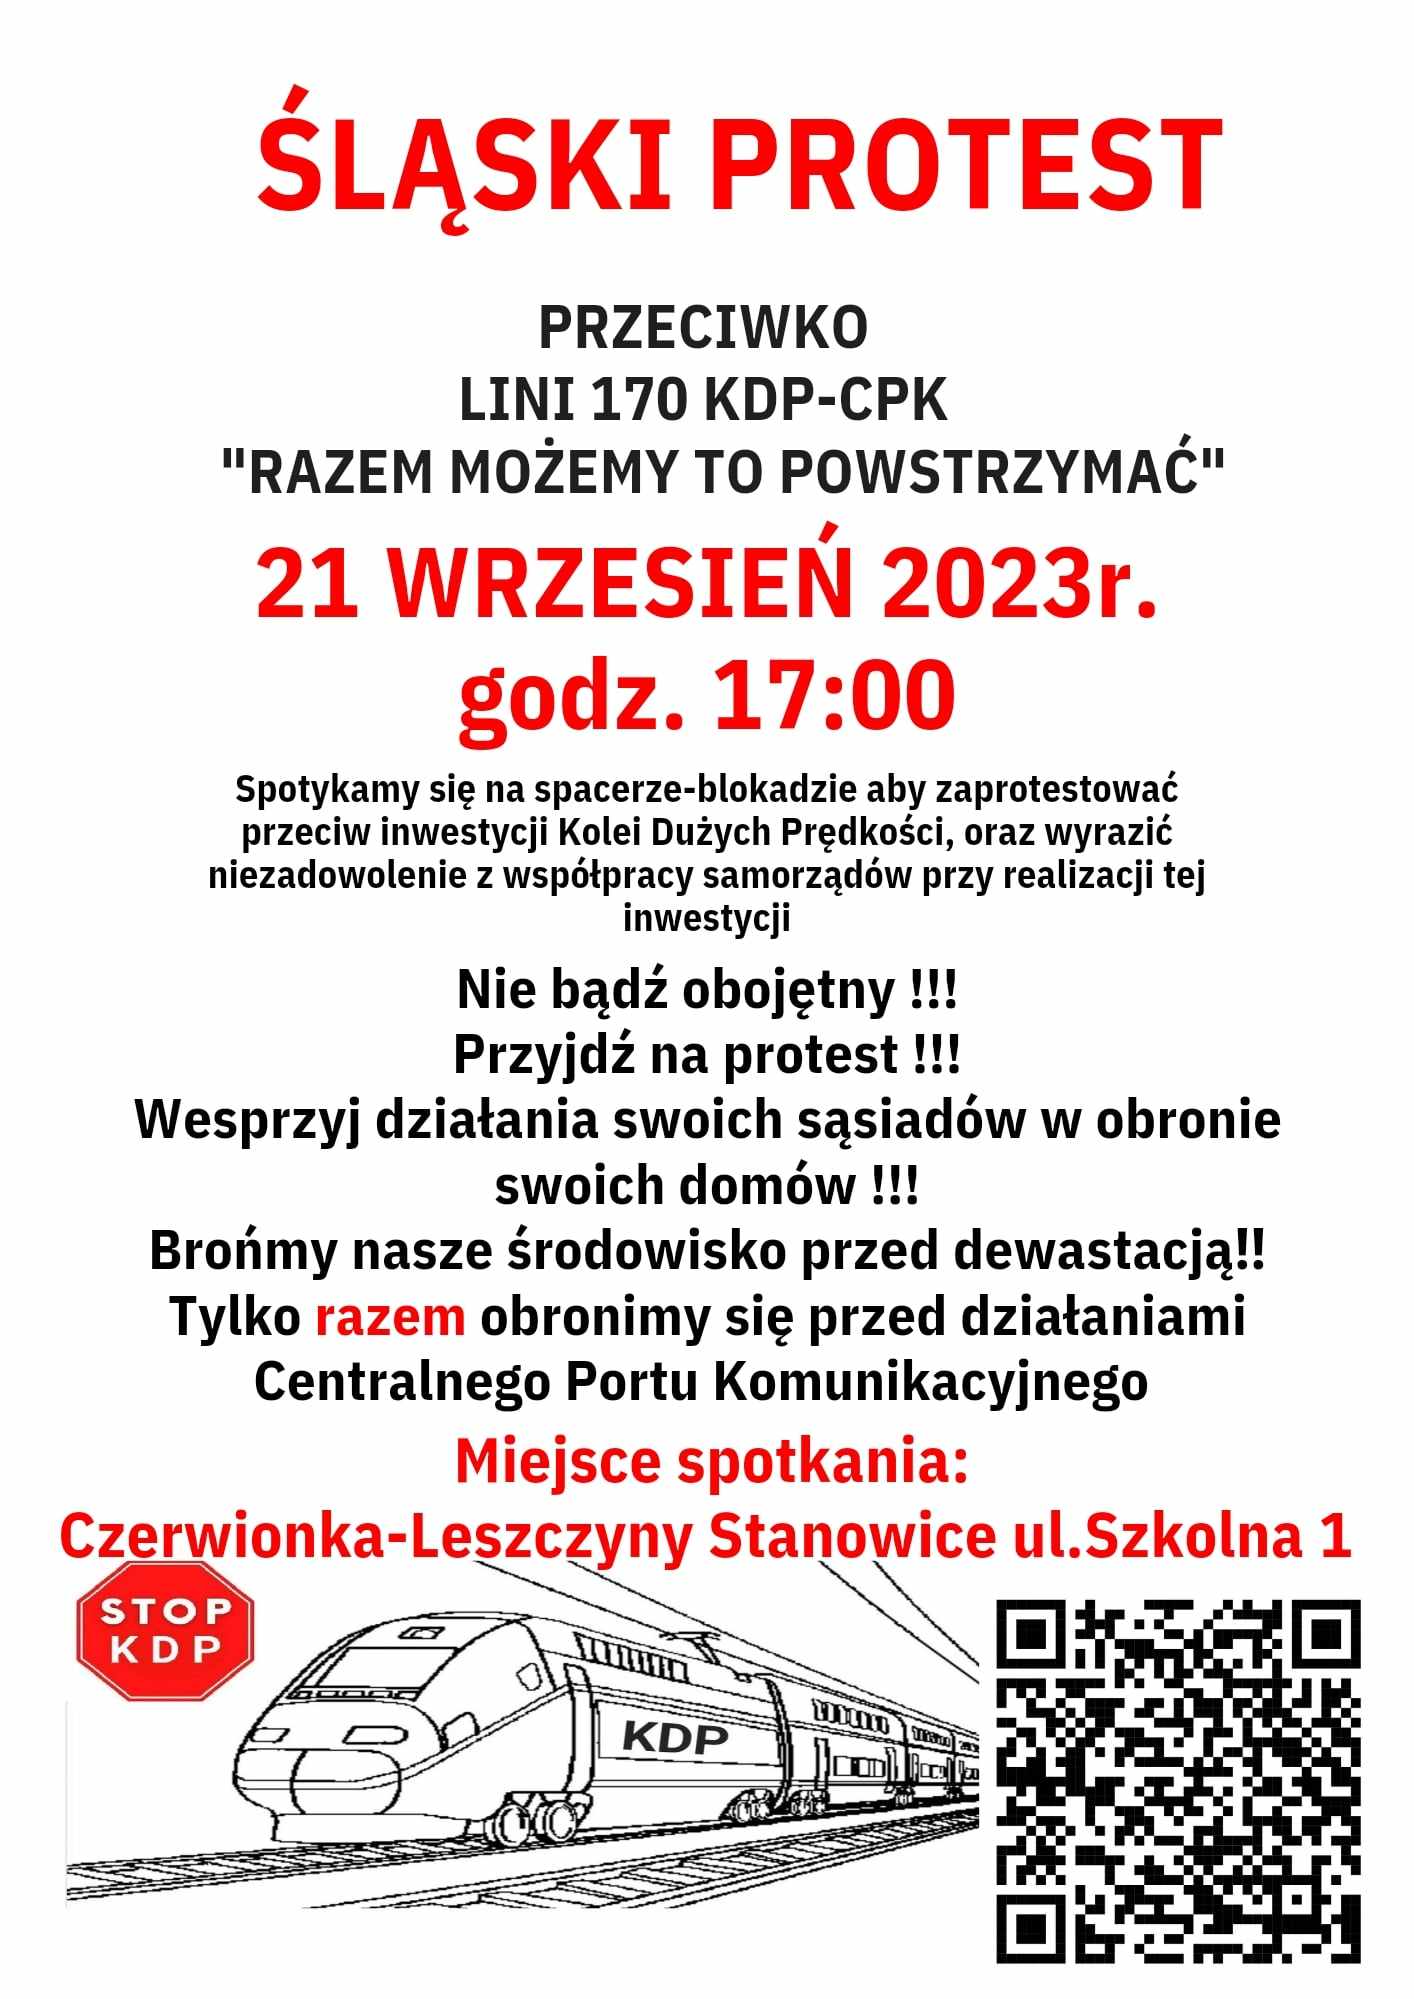 Śląski Wspólny Protest "Stop CPK-KDP Linii 170"